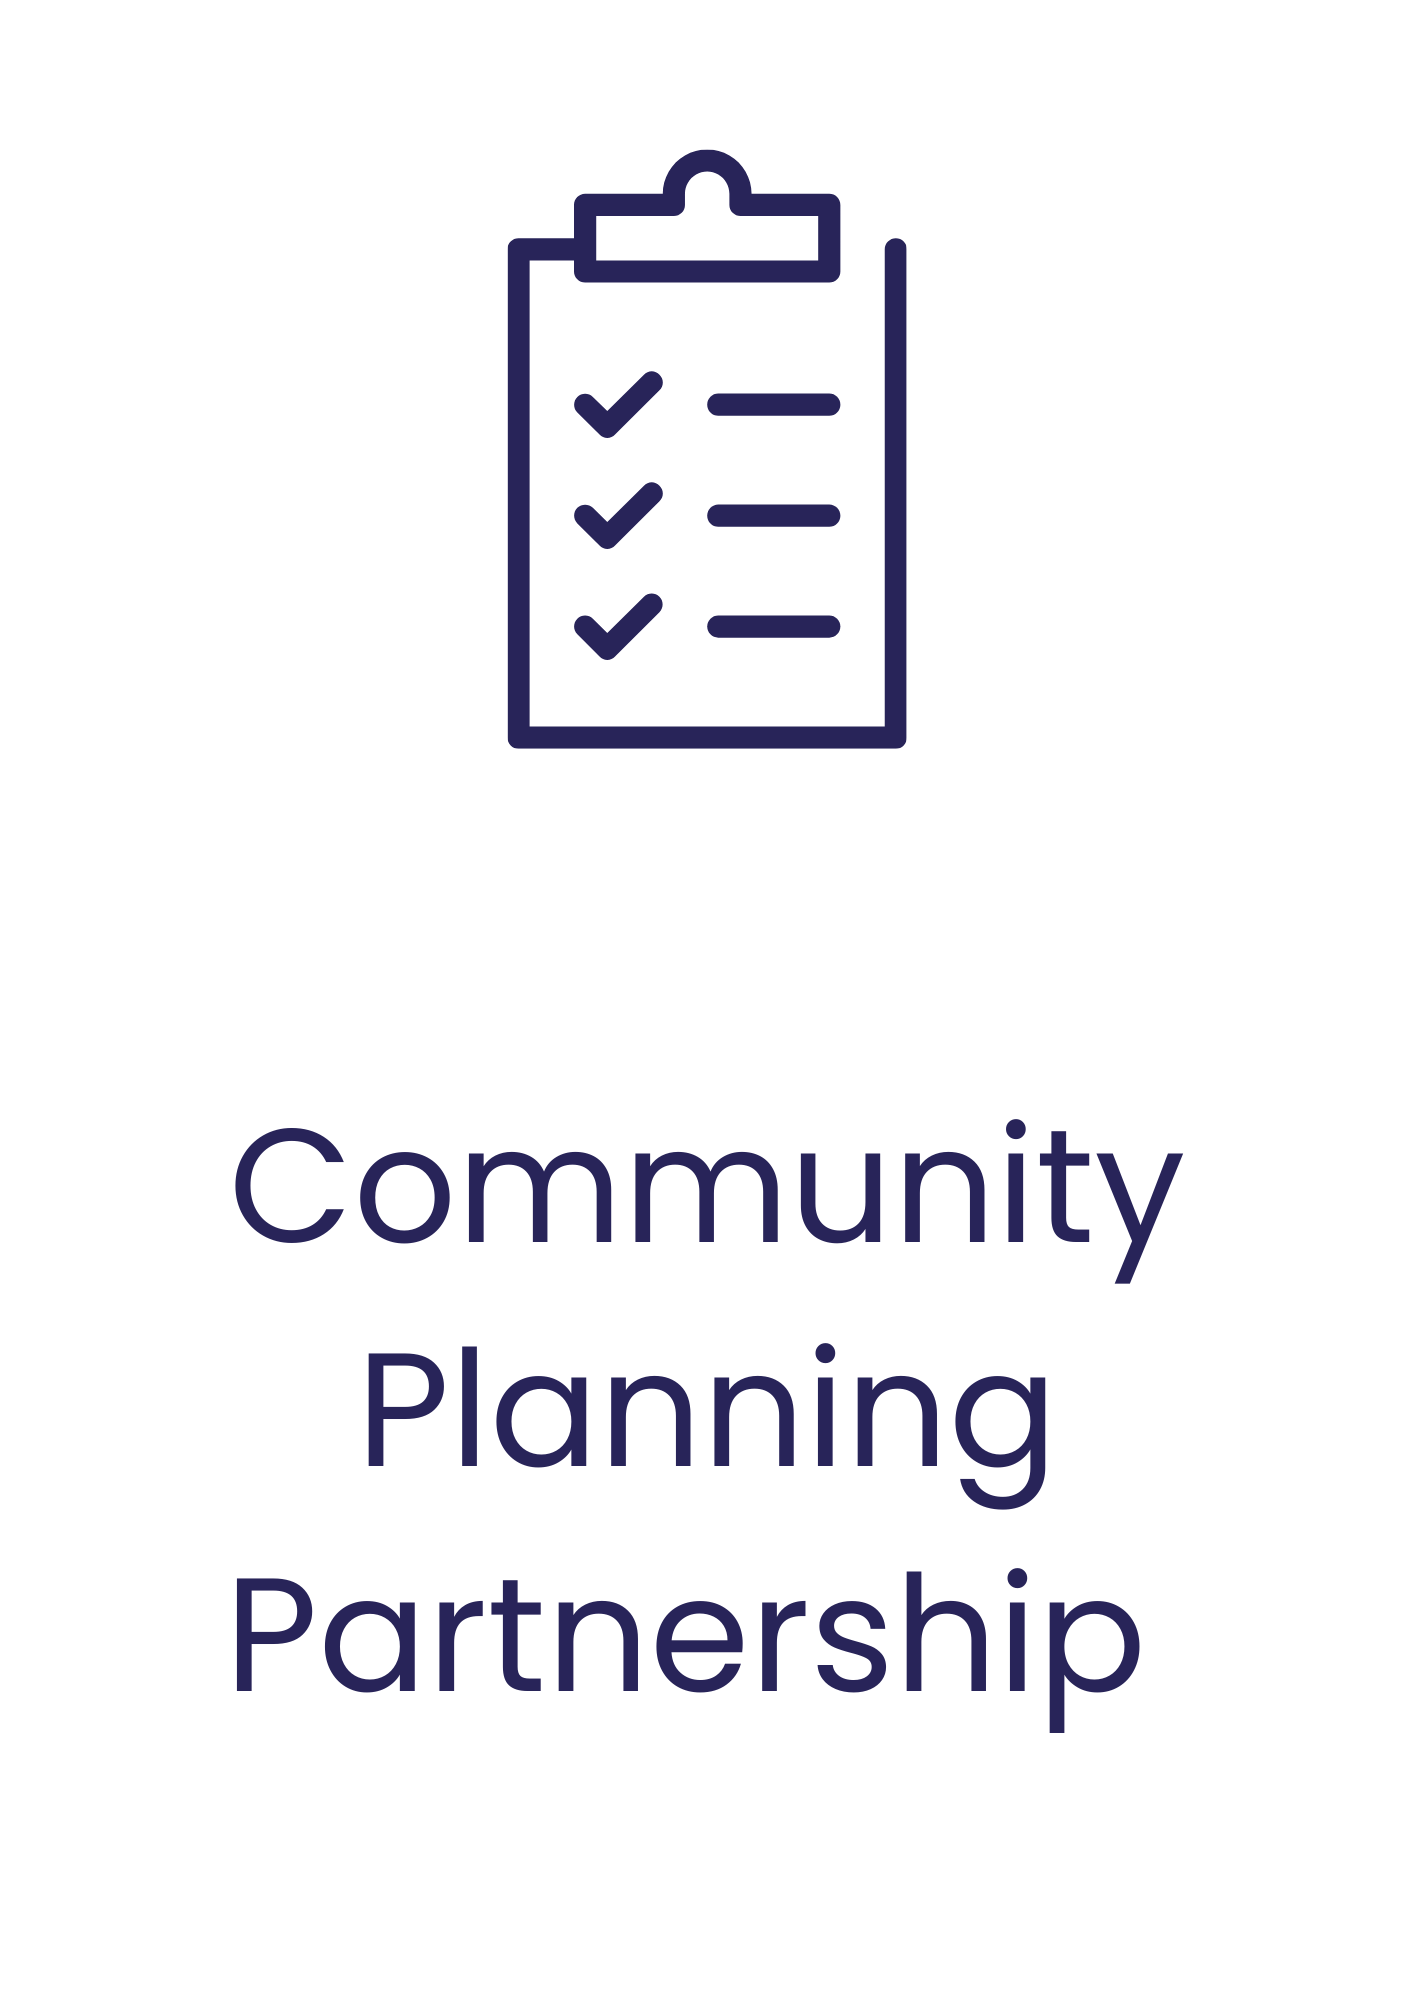 Planning Partnership